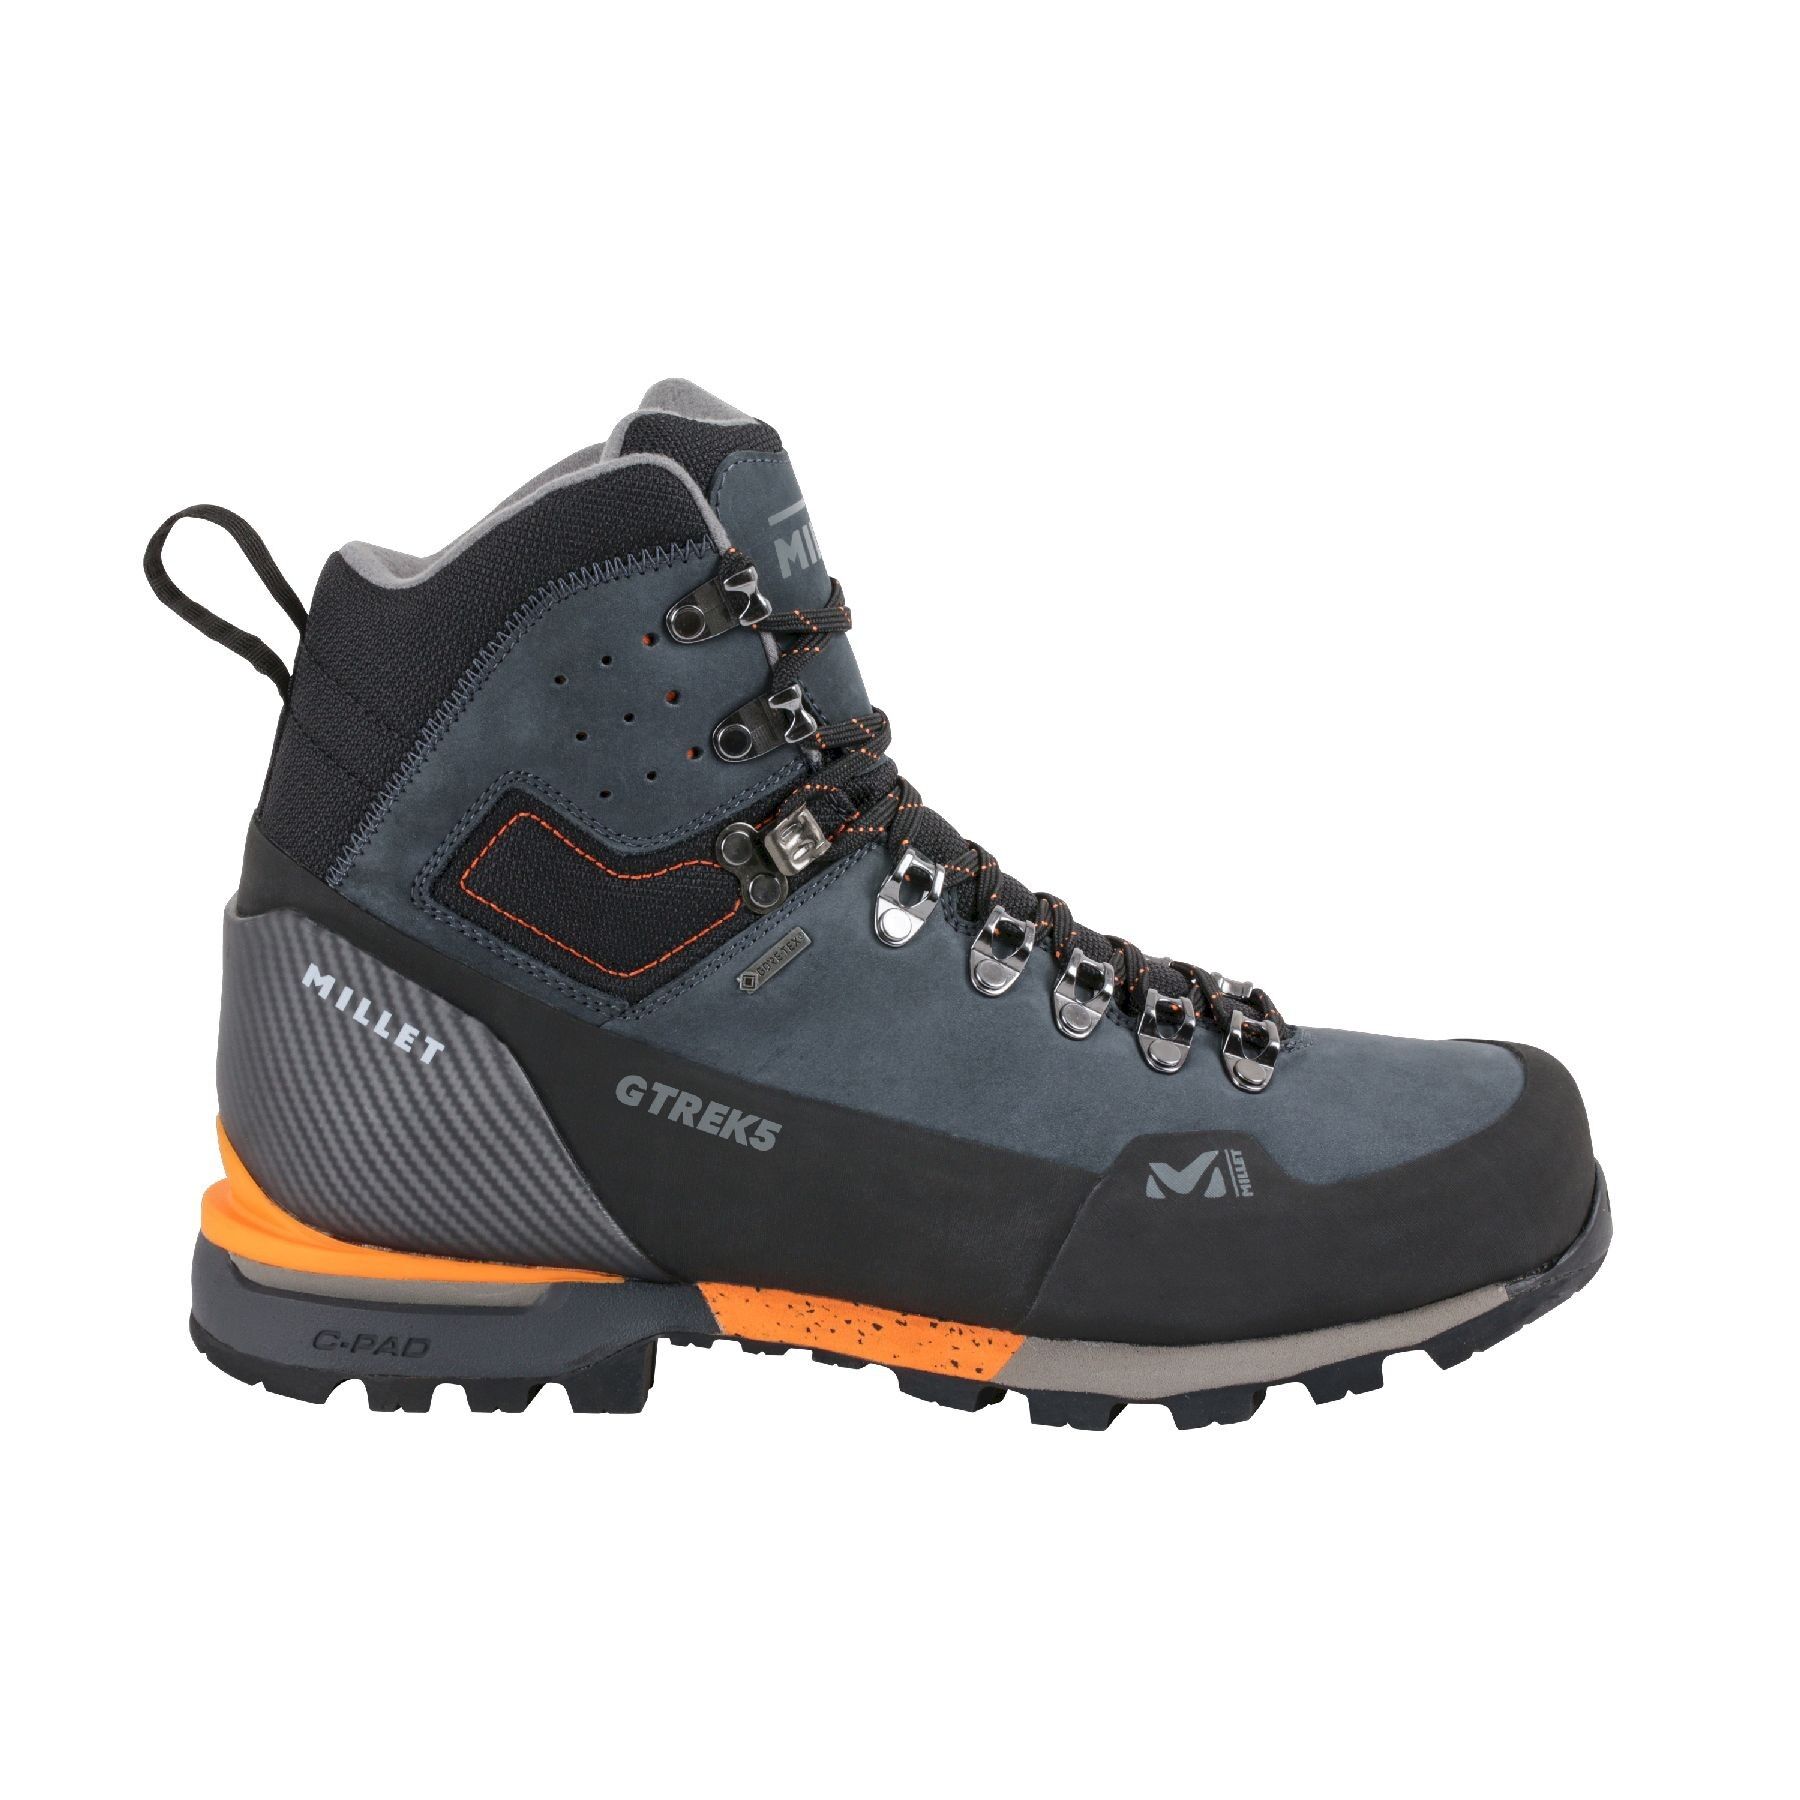 Millet G Trek 5 GTX - Hiking boots - Men's